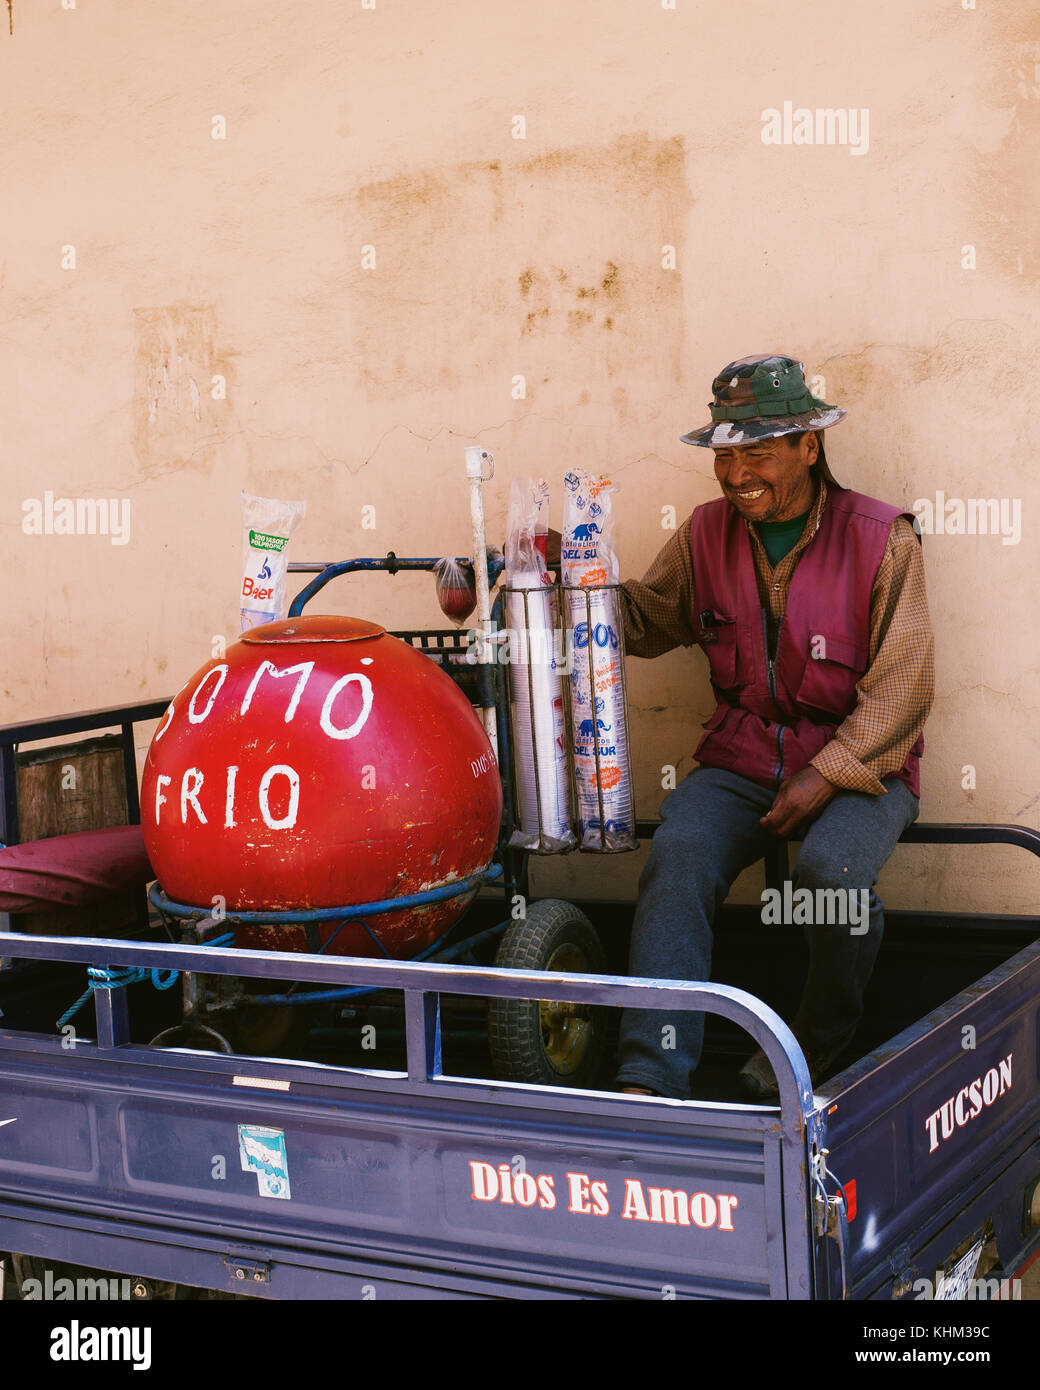 TARATA, COCHABAMBA, BOLIVIA S.A. - OCTOBER 2017: A street vendor sells Somo Frio, a popular Bolivian drink, in colonial Tarata, Bolivia. Stock Photo